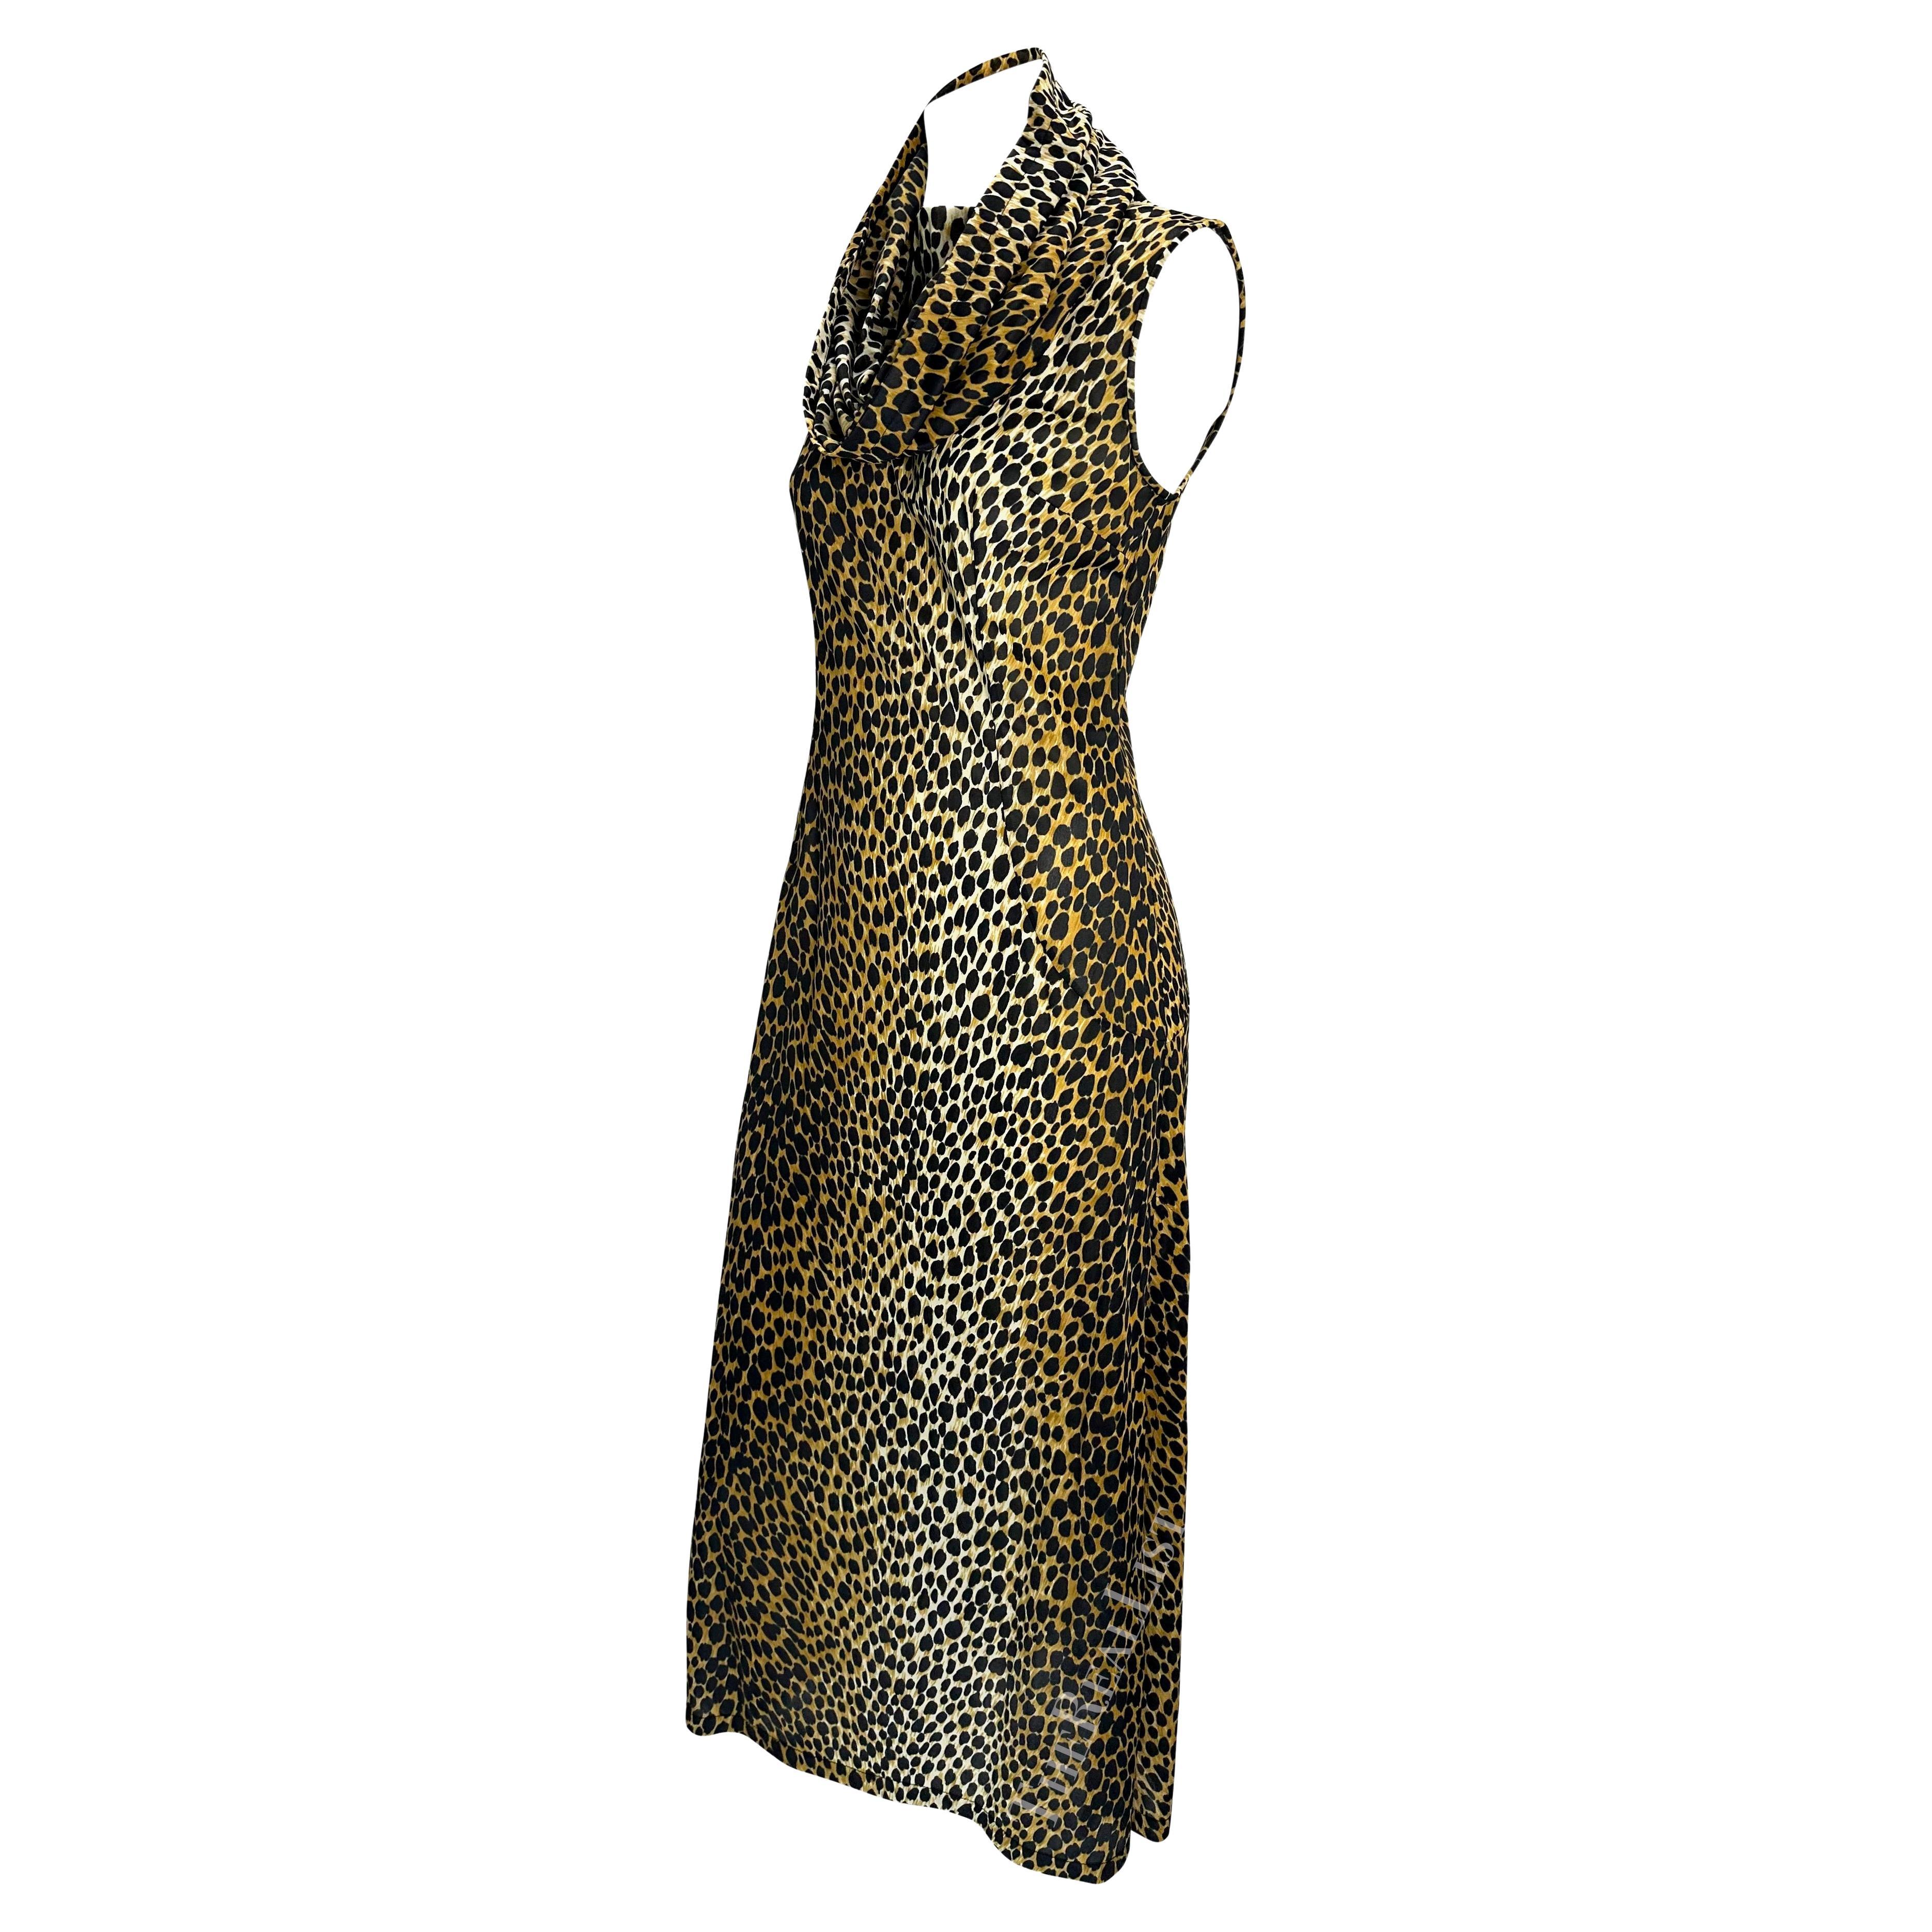 S/S 1996 Dolce & Gabbana Hooded Stretch Leopard Print Hit Slit Dress For Sale 7